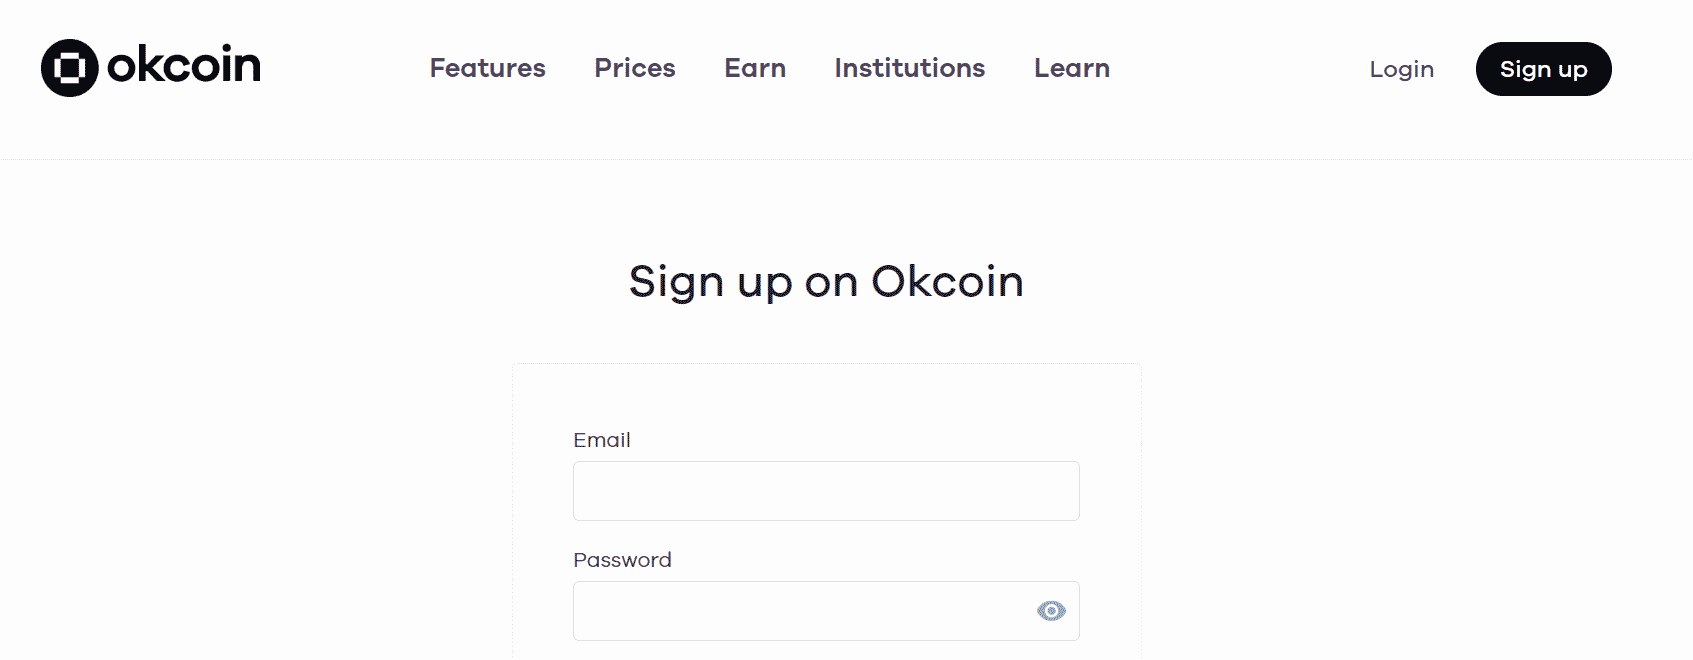 okcoin - sign up